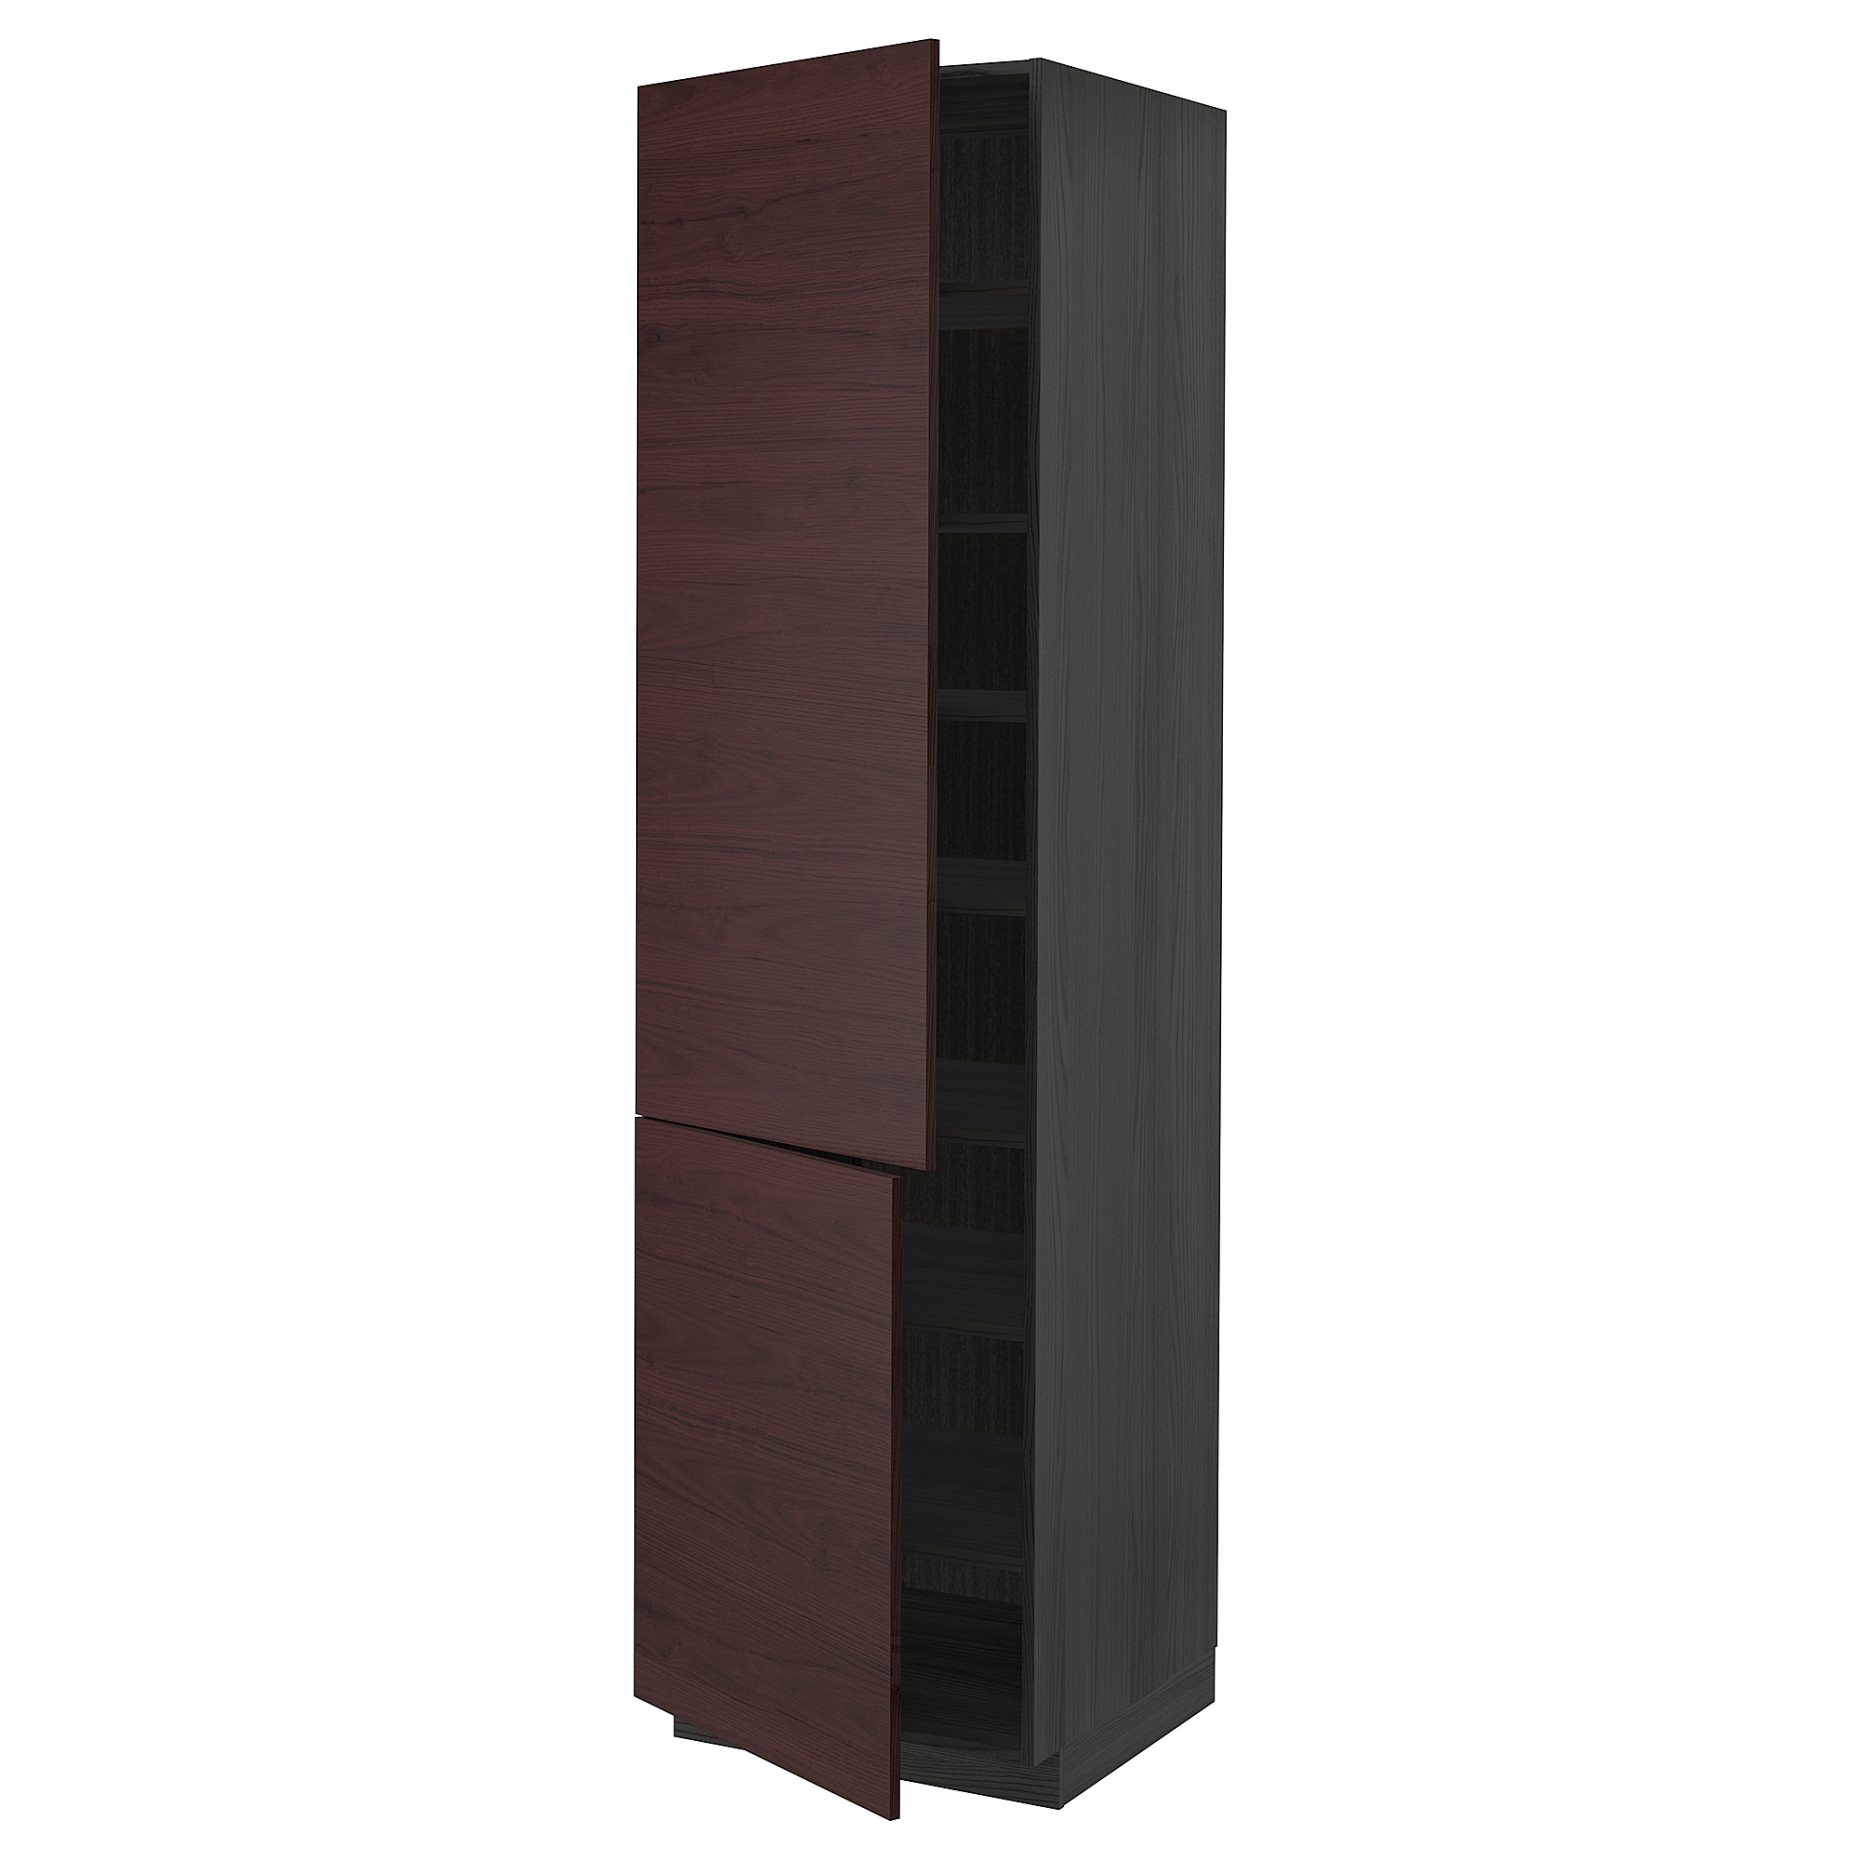 METOD, ψηλό ντουλάπι με ράφια/2 πόρτες, 60x60x220 cm, 394.599.26